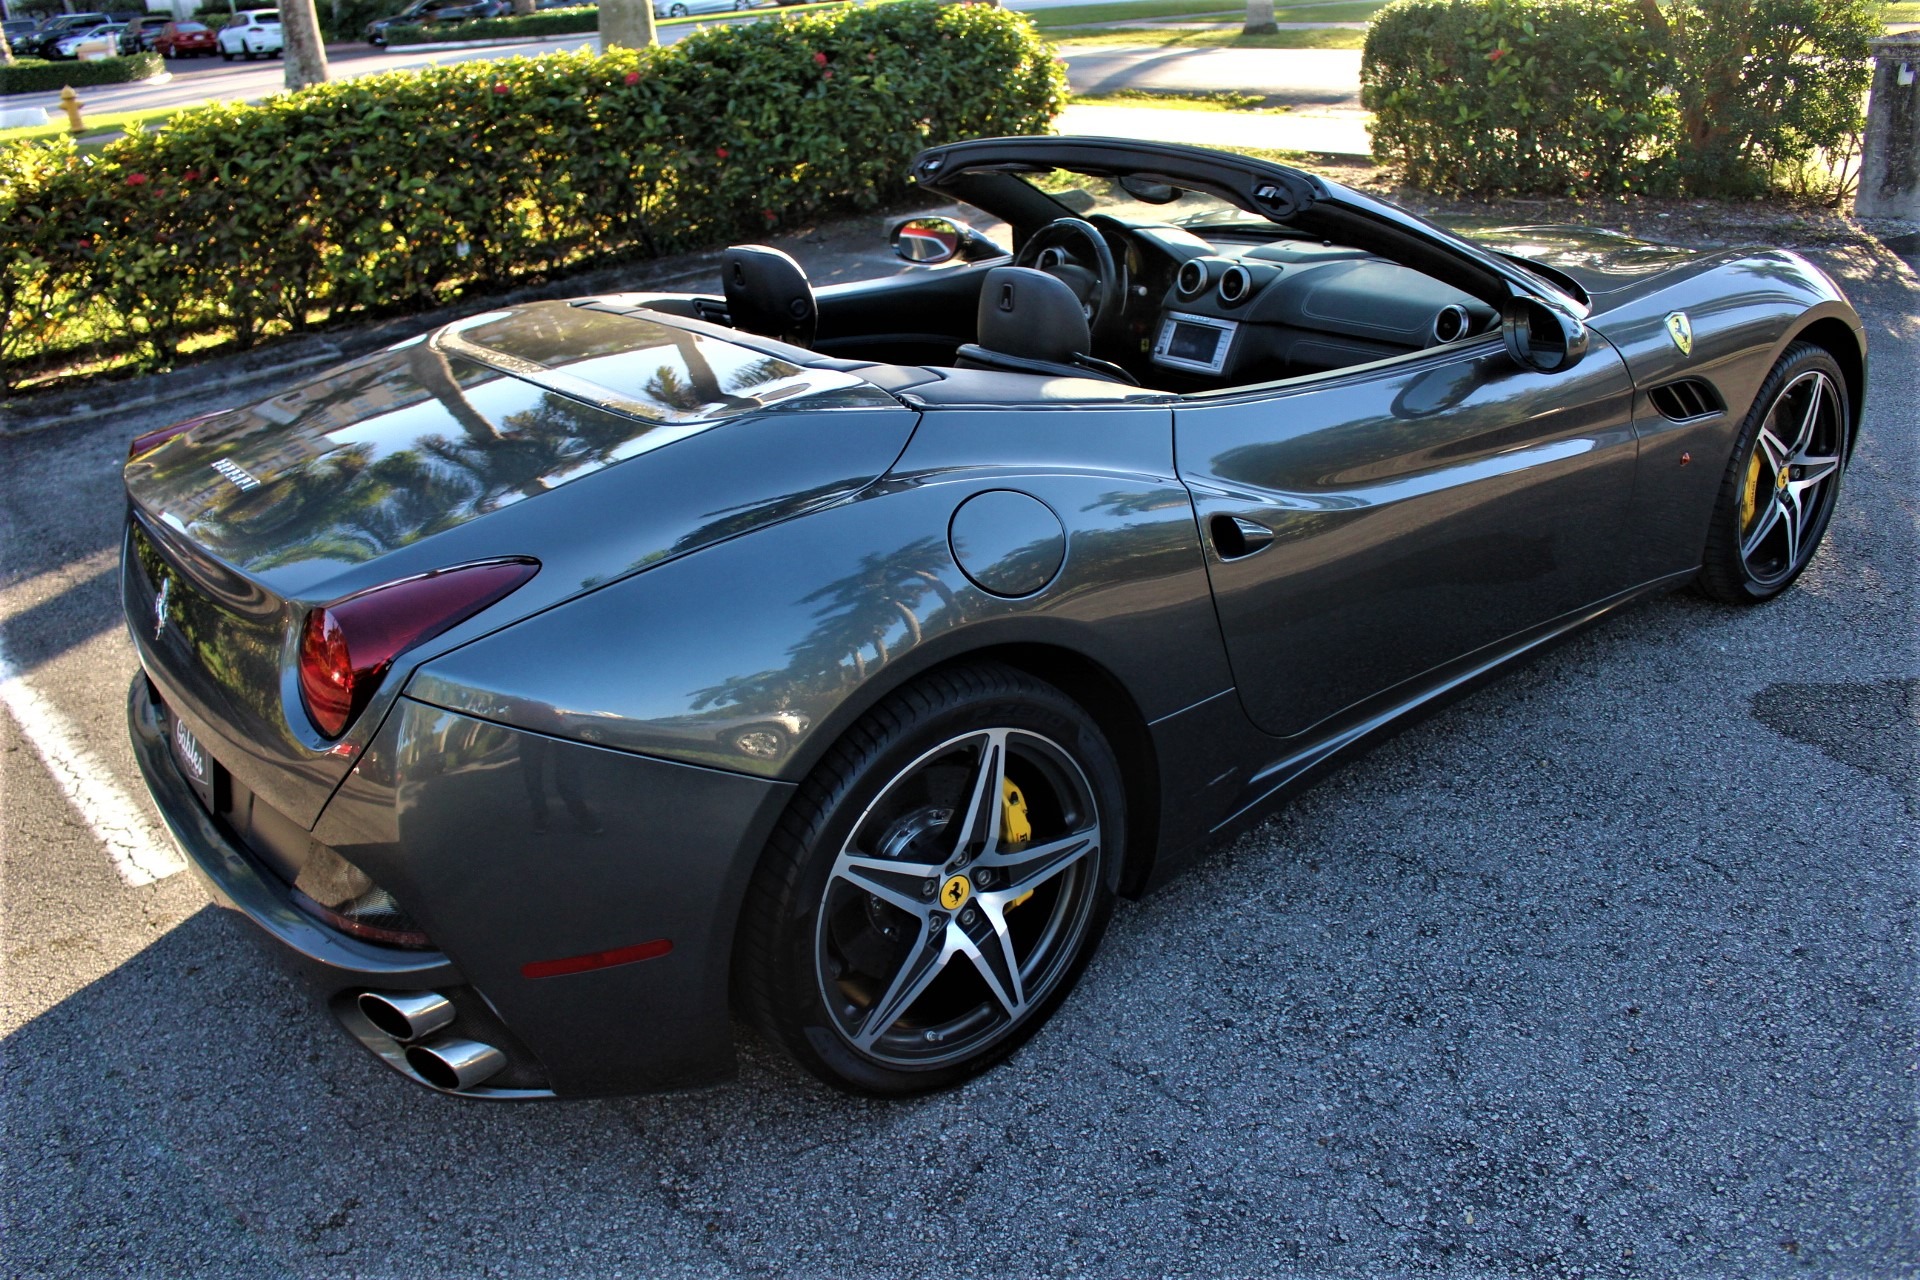 Used 2011 Ferrari California for sale Sold at The Gables Sports Cars in Miami FL 33146 4